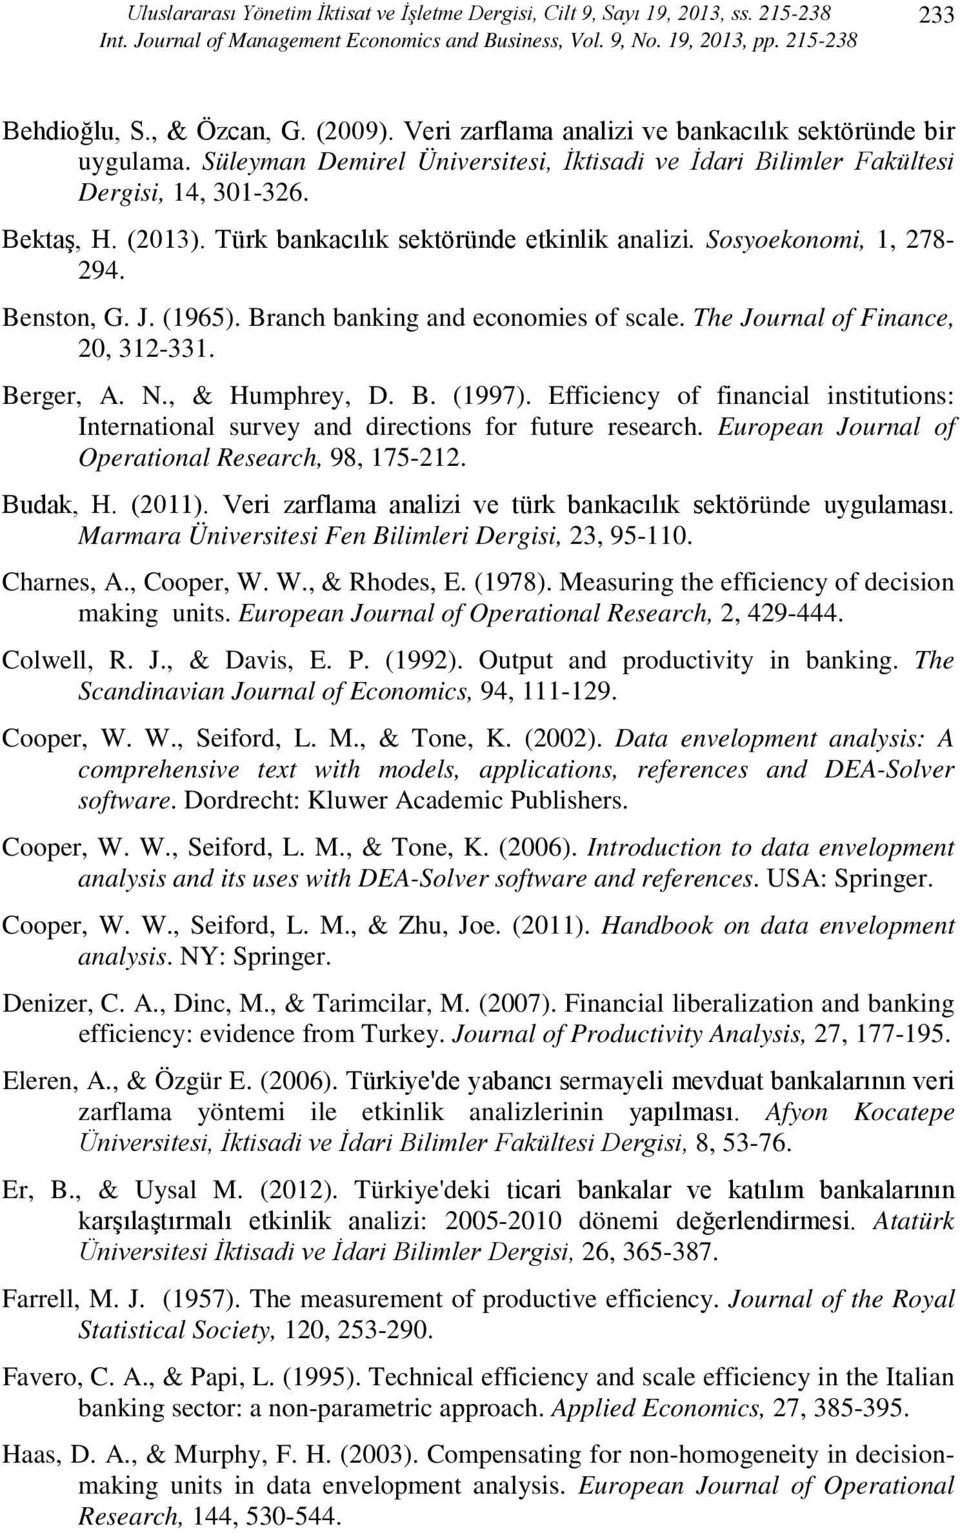 Türk bankacılık sektöründe etkinlik analizi. Sosyoekonomi,, 278-294. Benston, G. J. (965). Branch banking and economies of scale. The Journal of Finance, 20, 32-33. Berger, A. N., & Humphrey, D. B. (997).